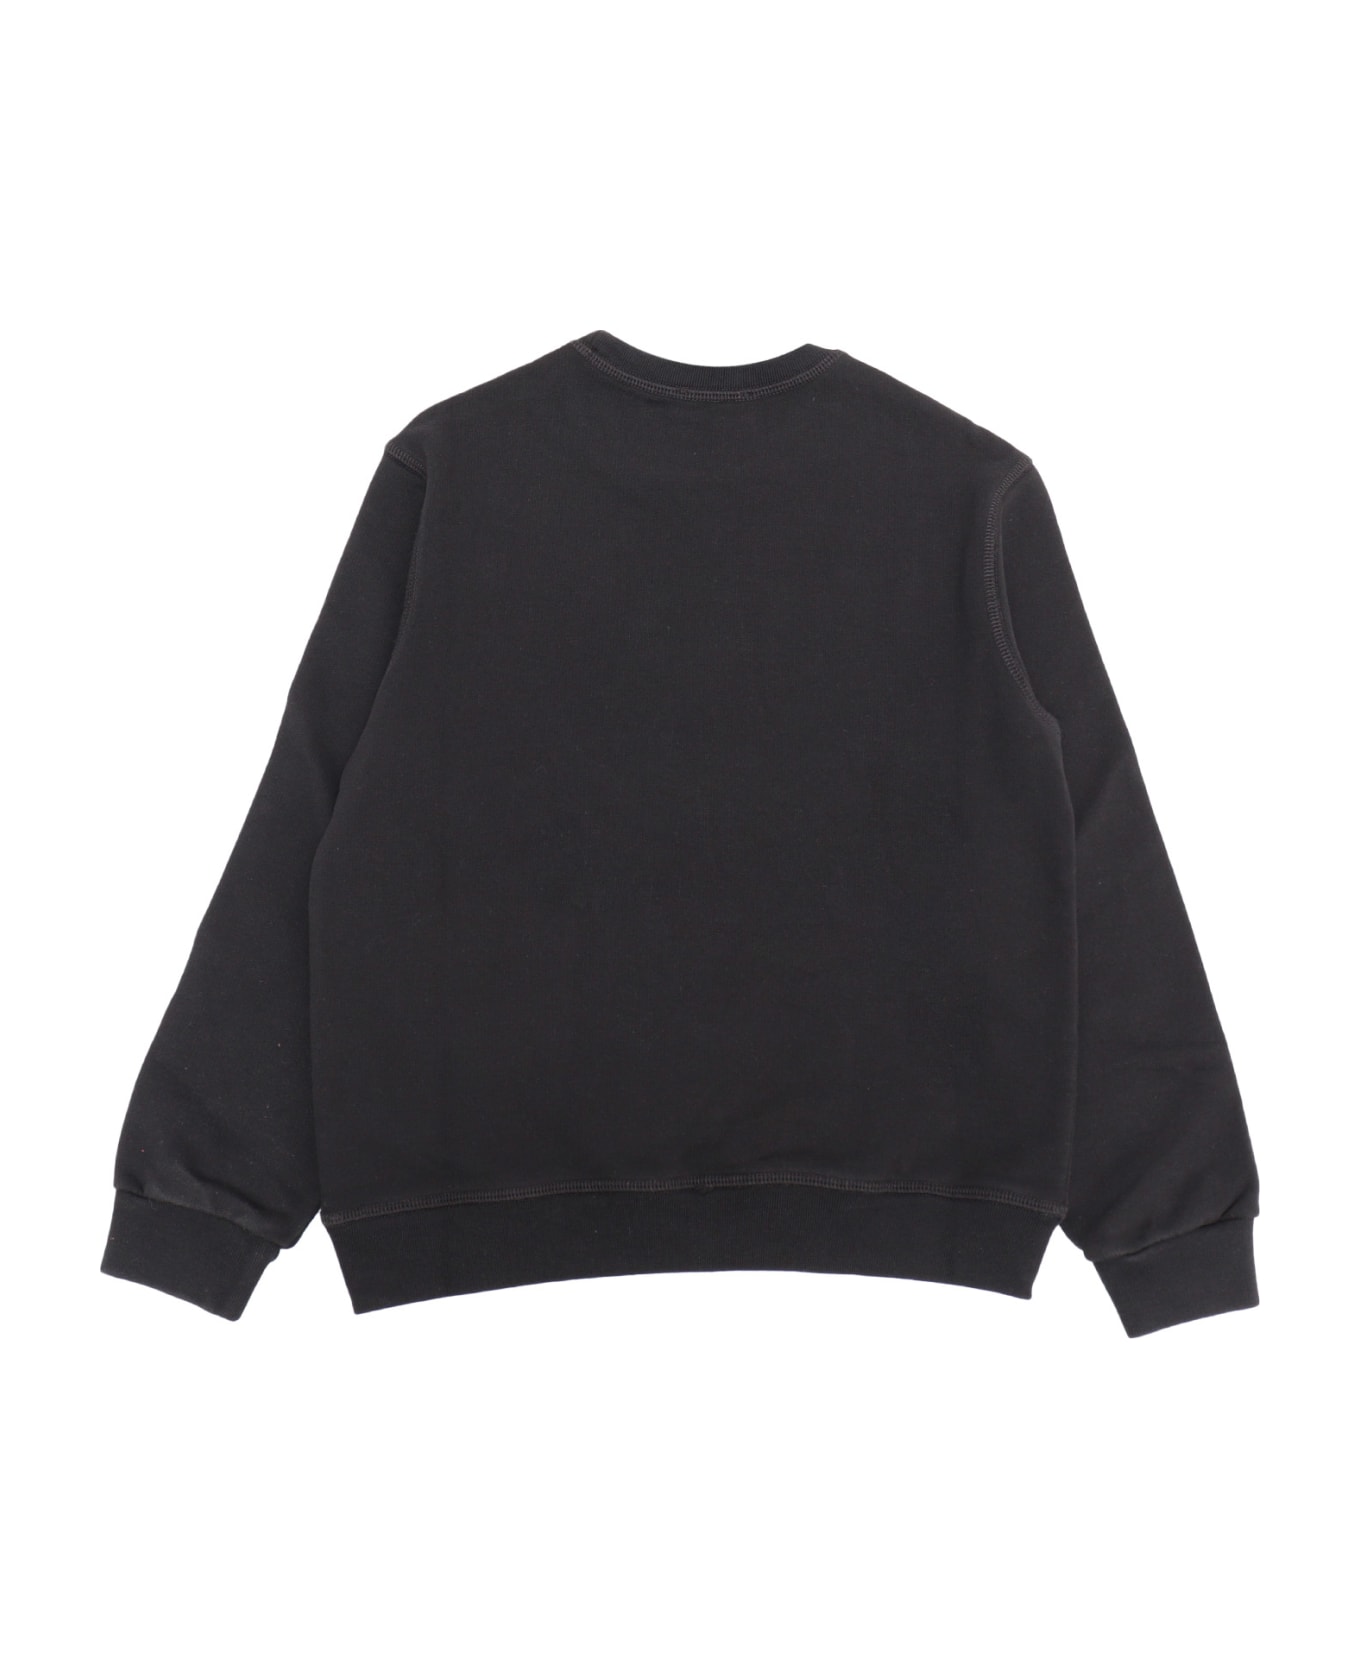 Dsquared2 Black Icon Sweatshirt - BLACK